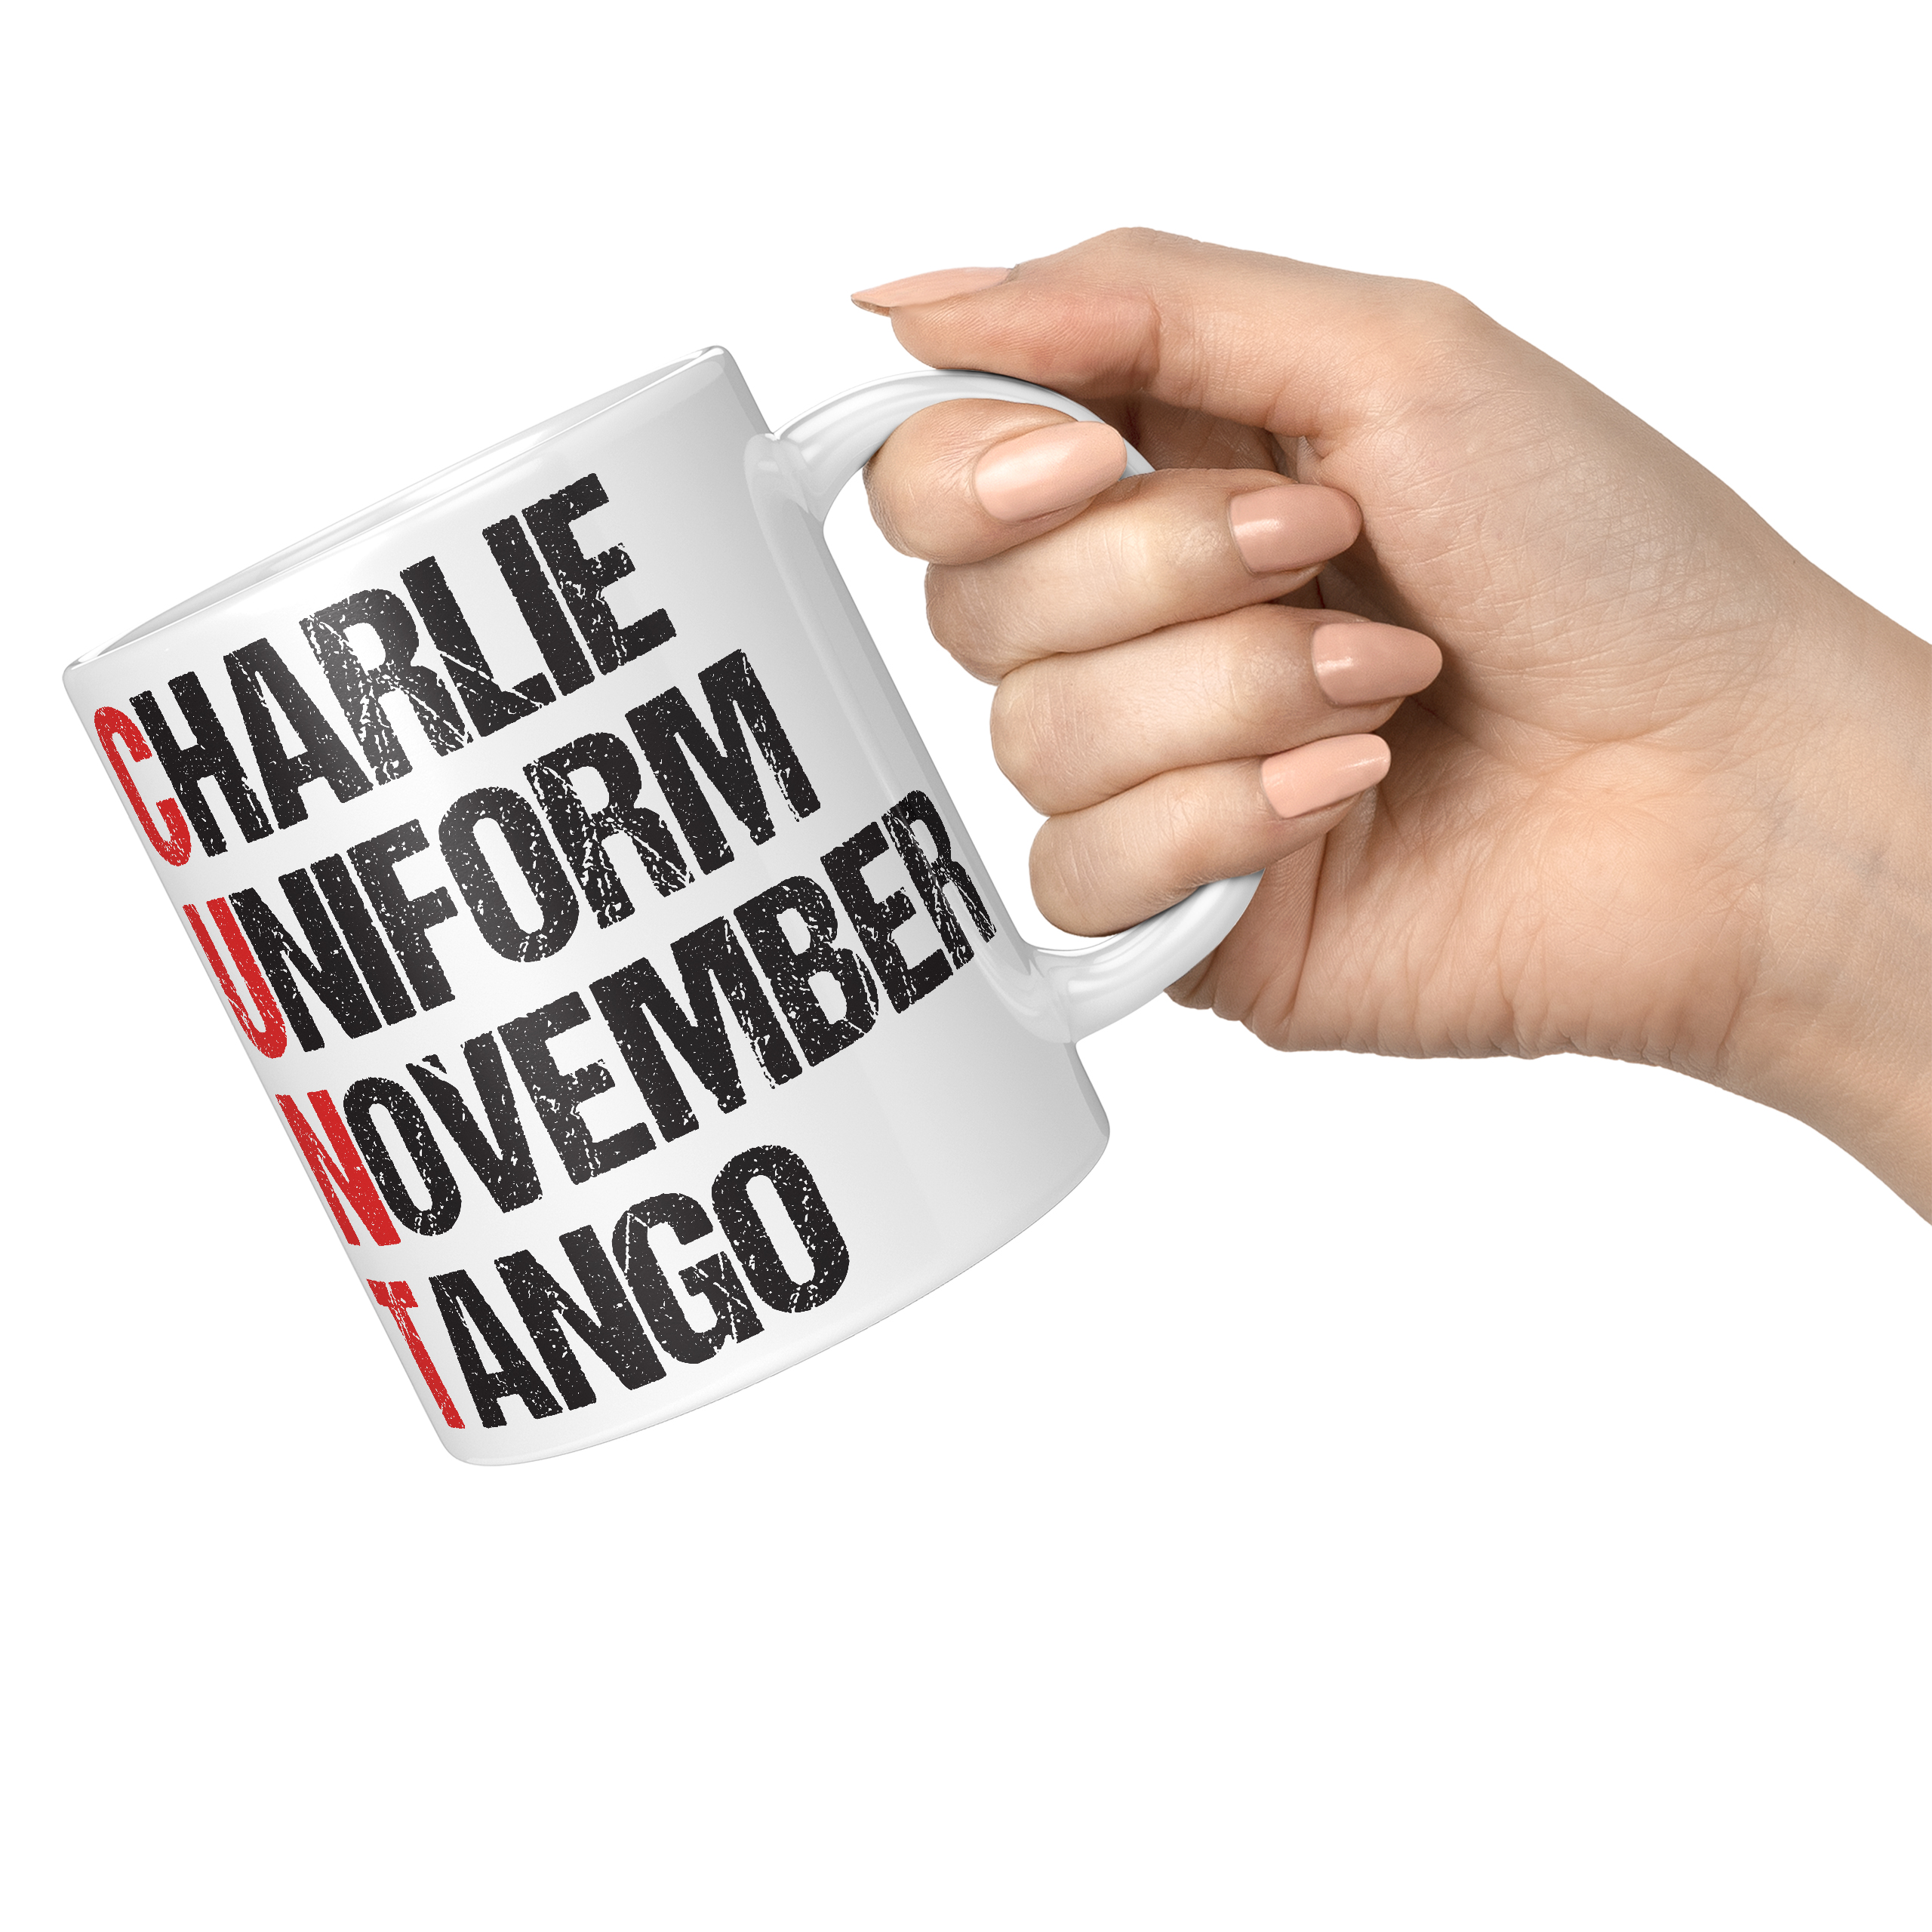 CHARLE UNIFORM NOVEMBER TANGO 11oz NOVELTY MUG Mugs